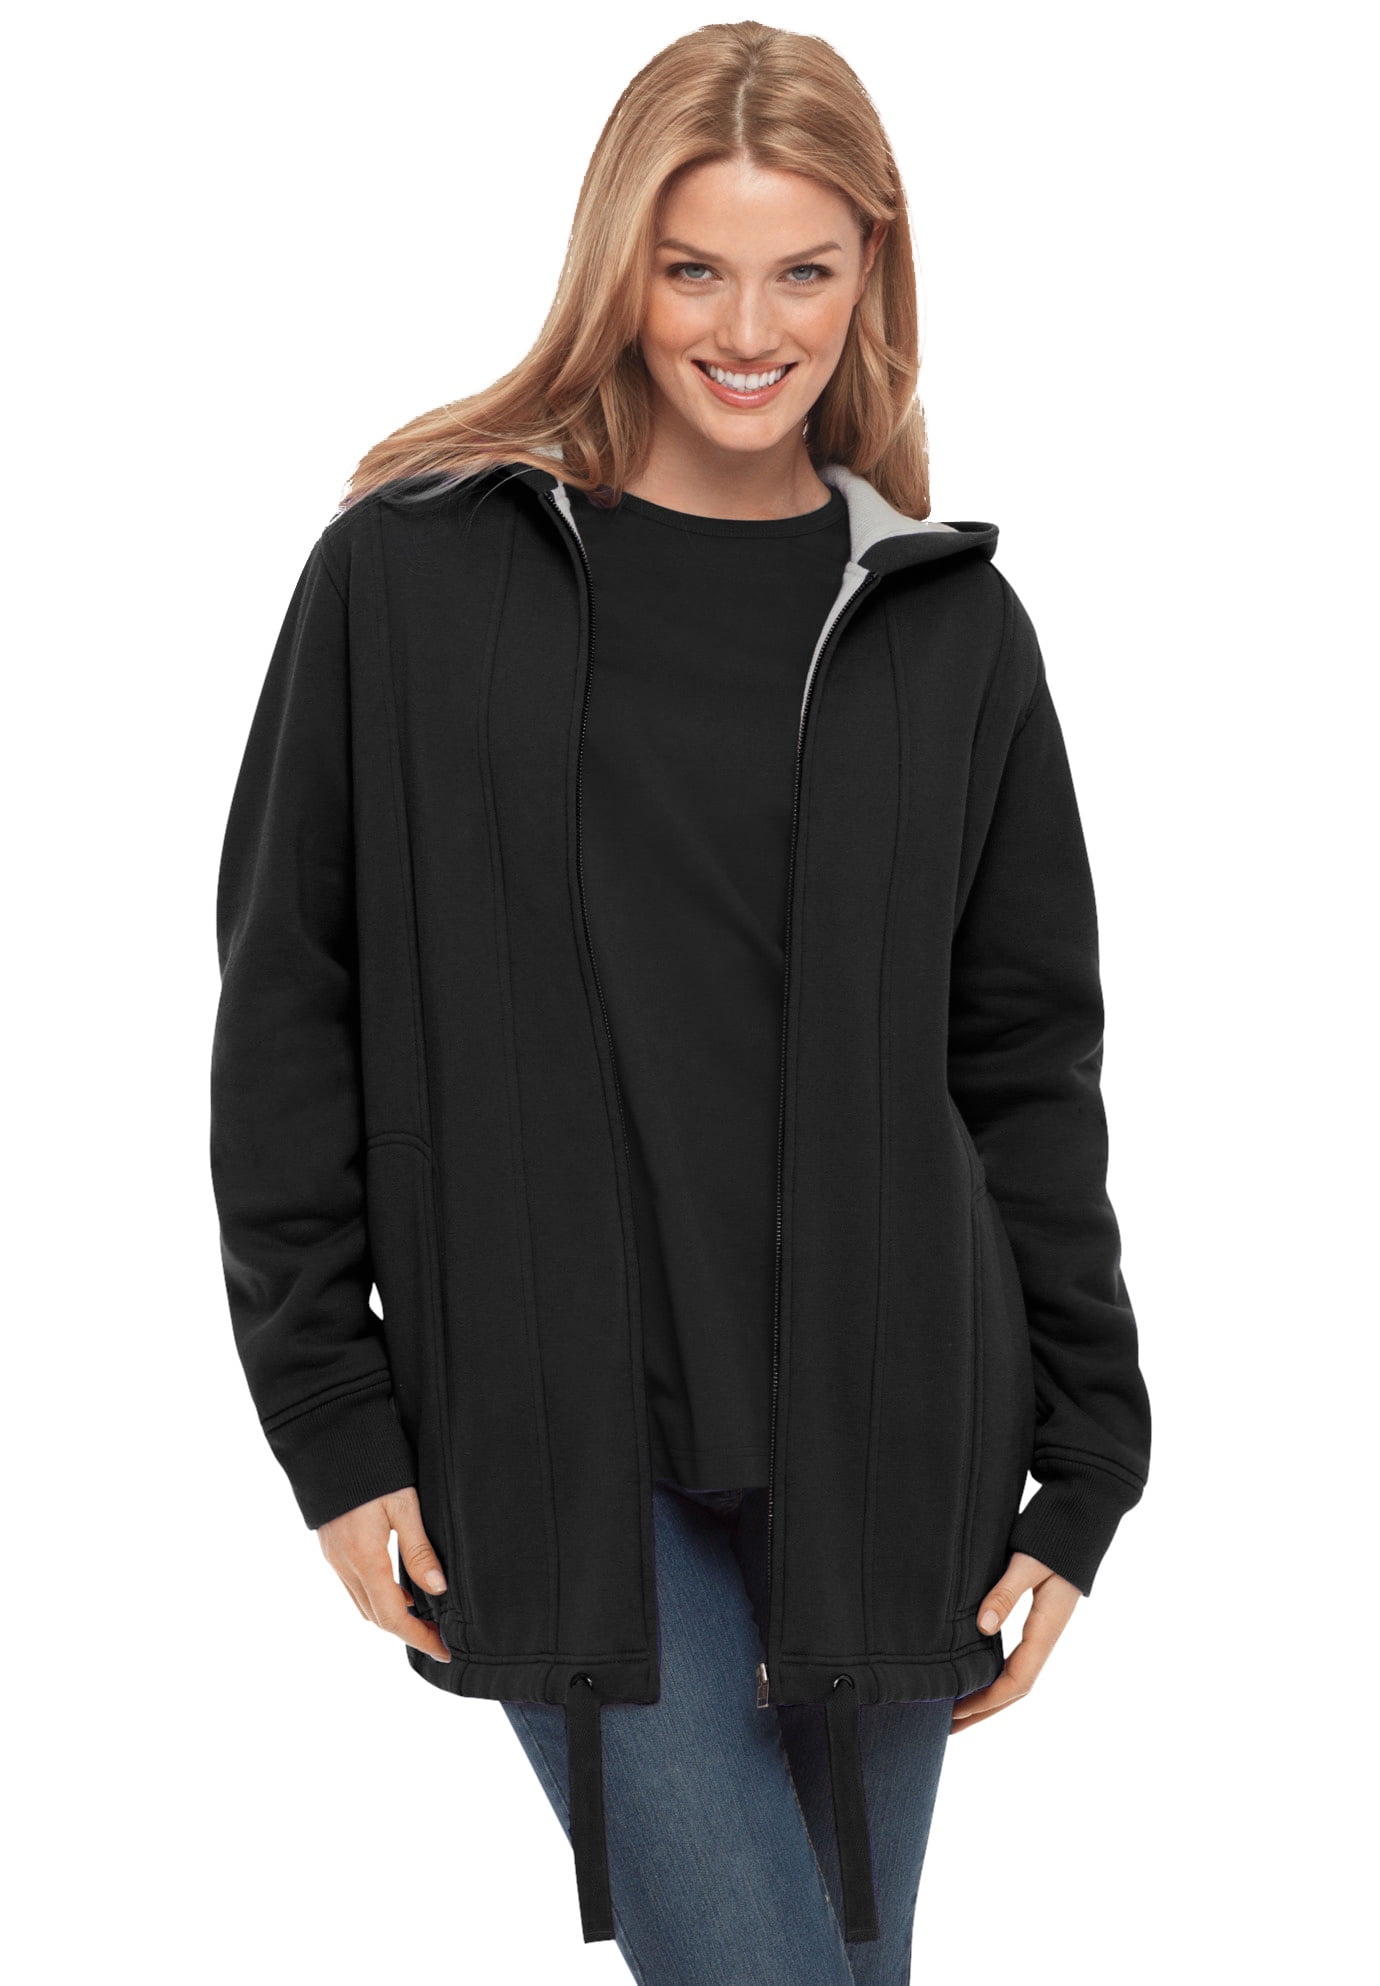 Plus Size Women Hoodies Zip Up Jacket Coat Oversize Hoody Hooded Fleece Outwear